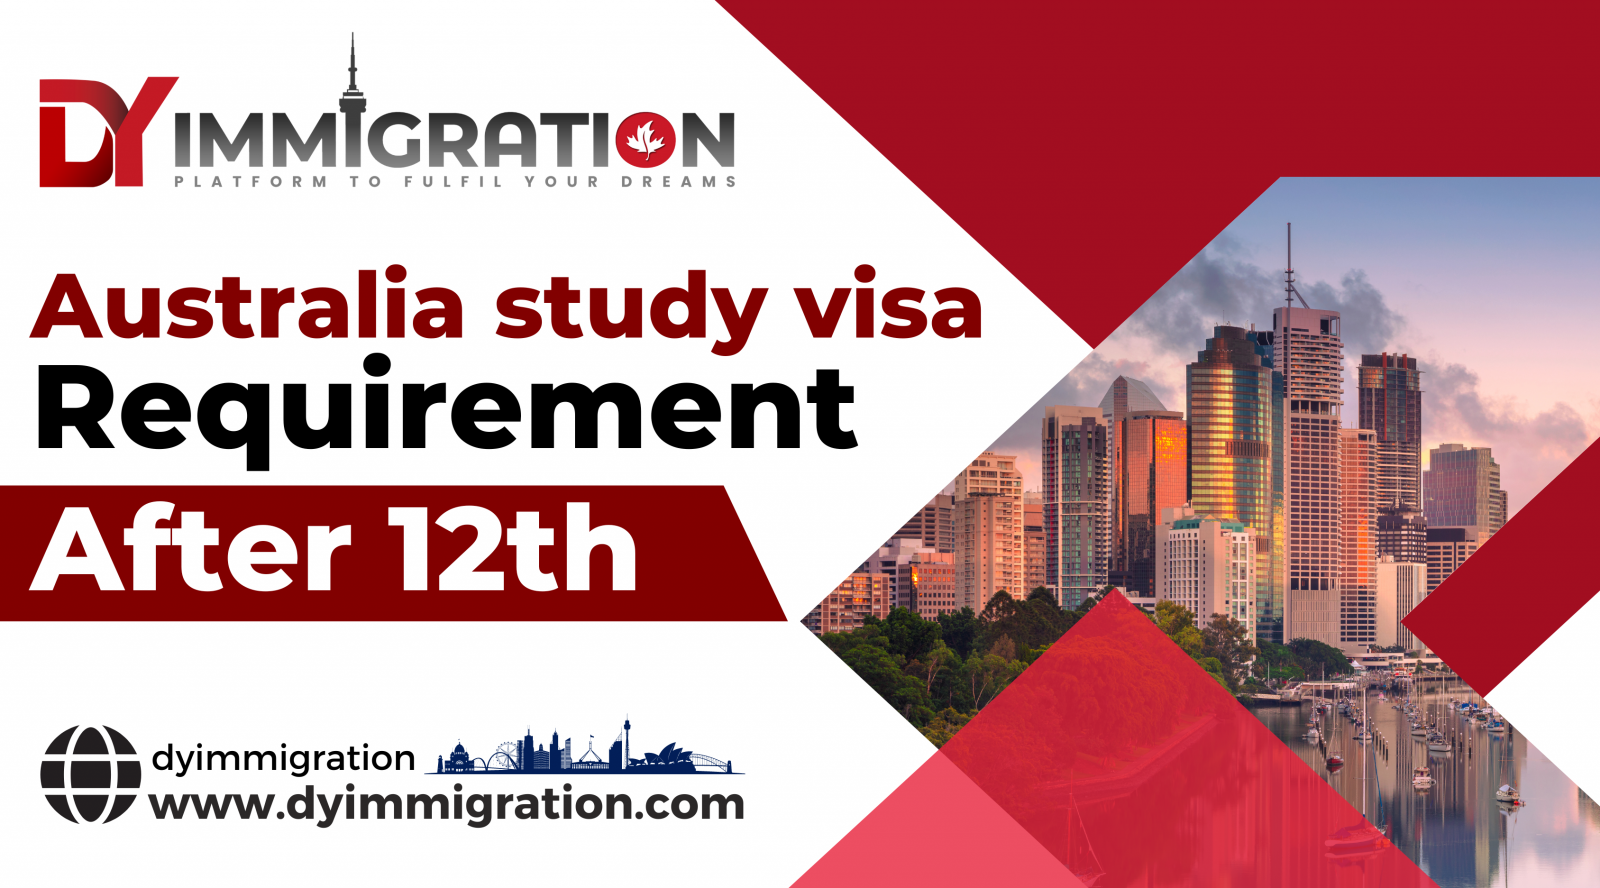 Australia study visa after 12